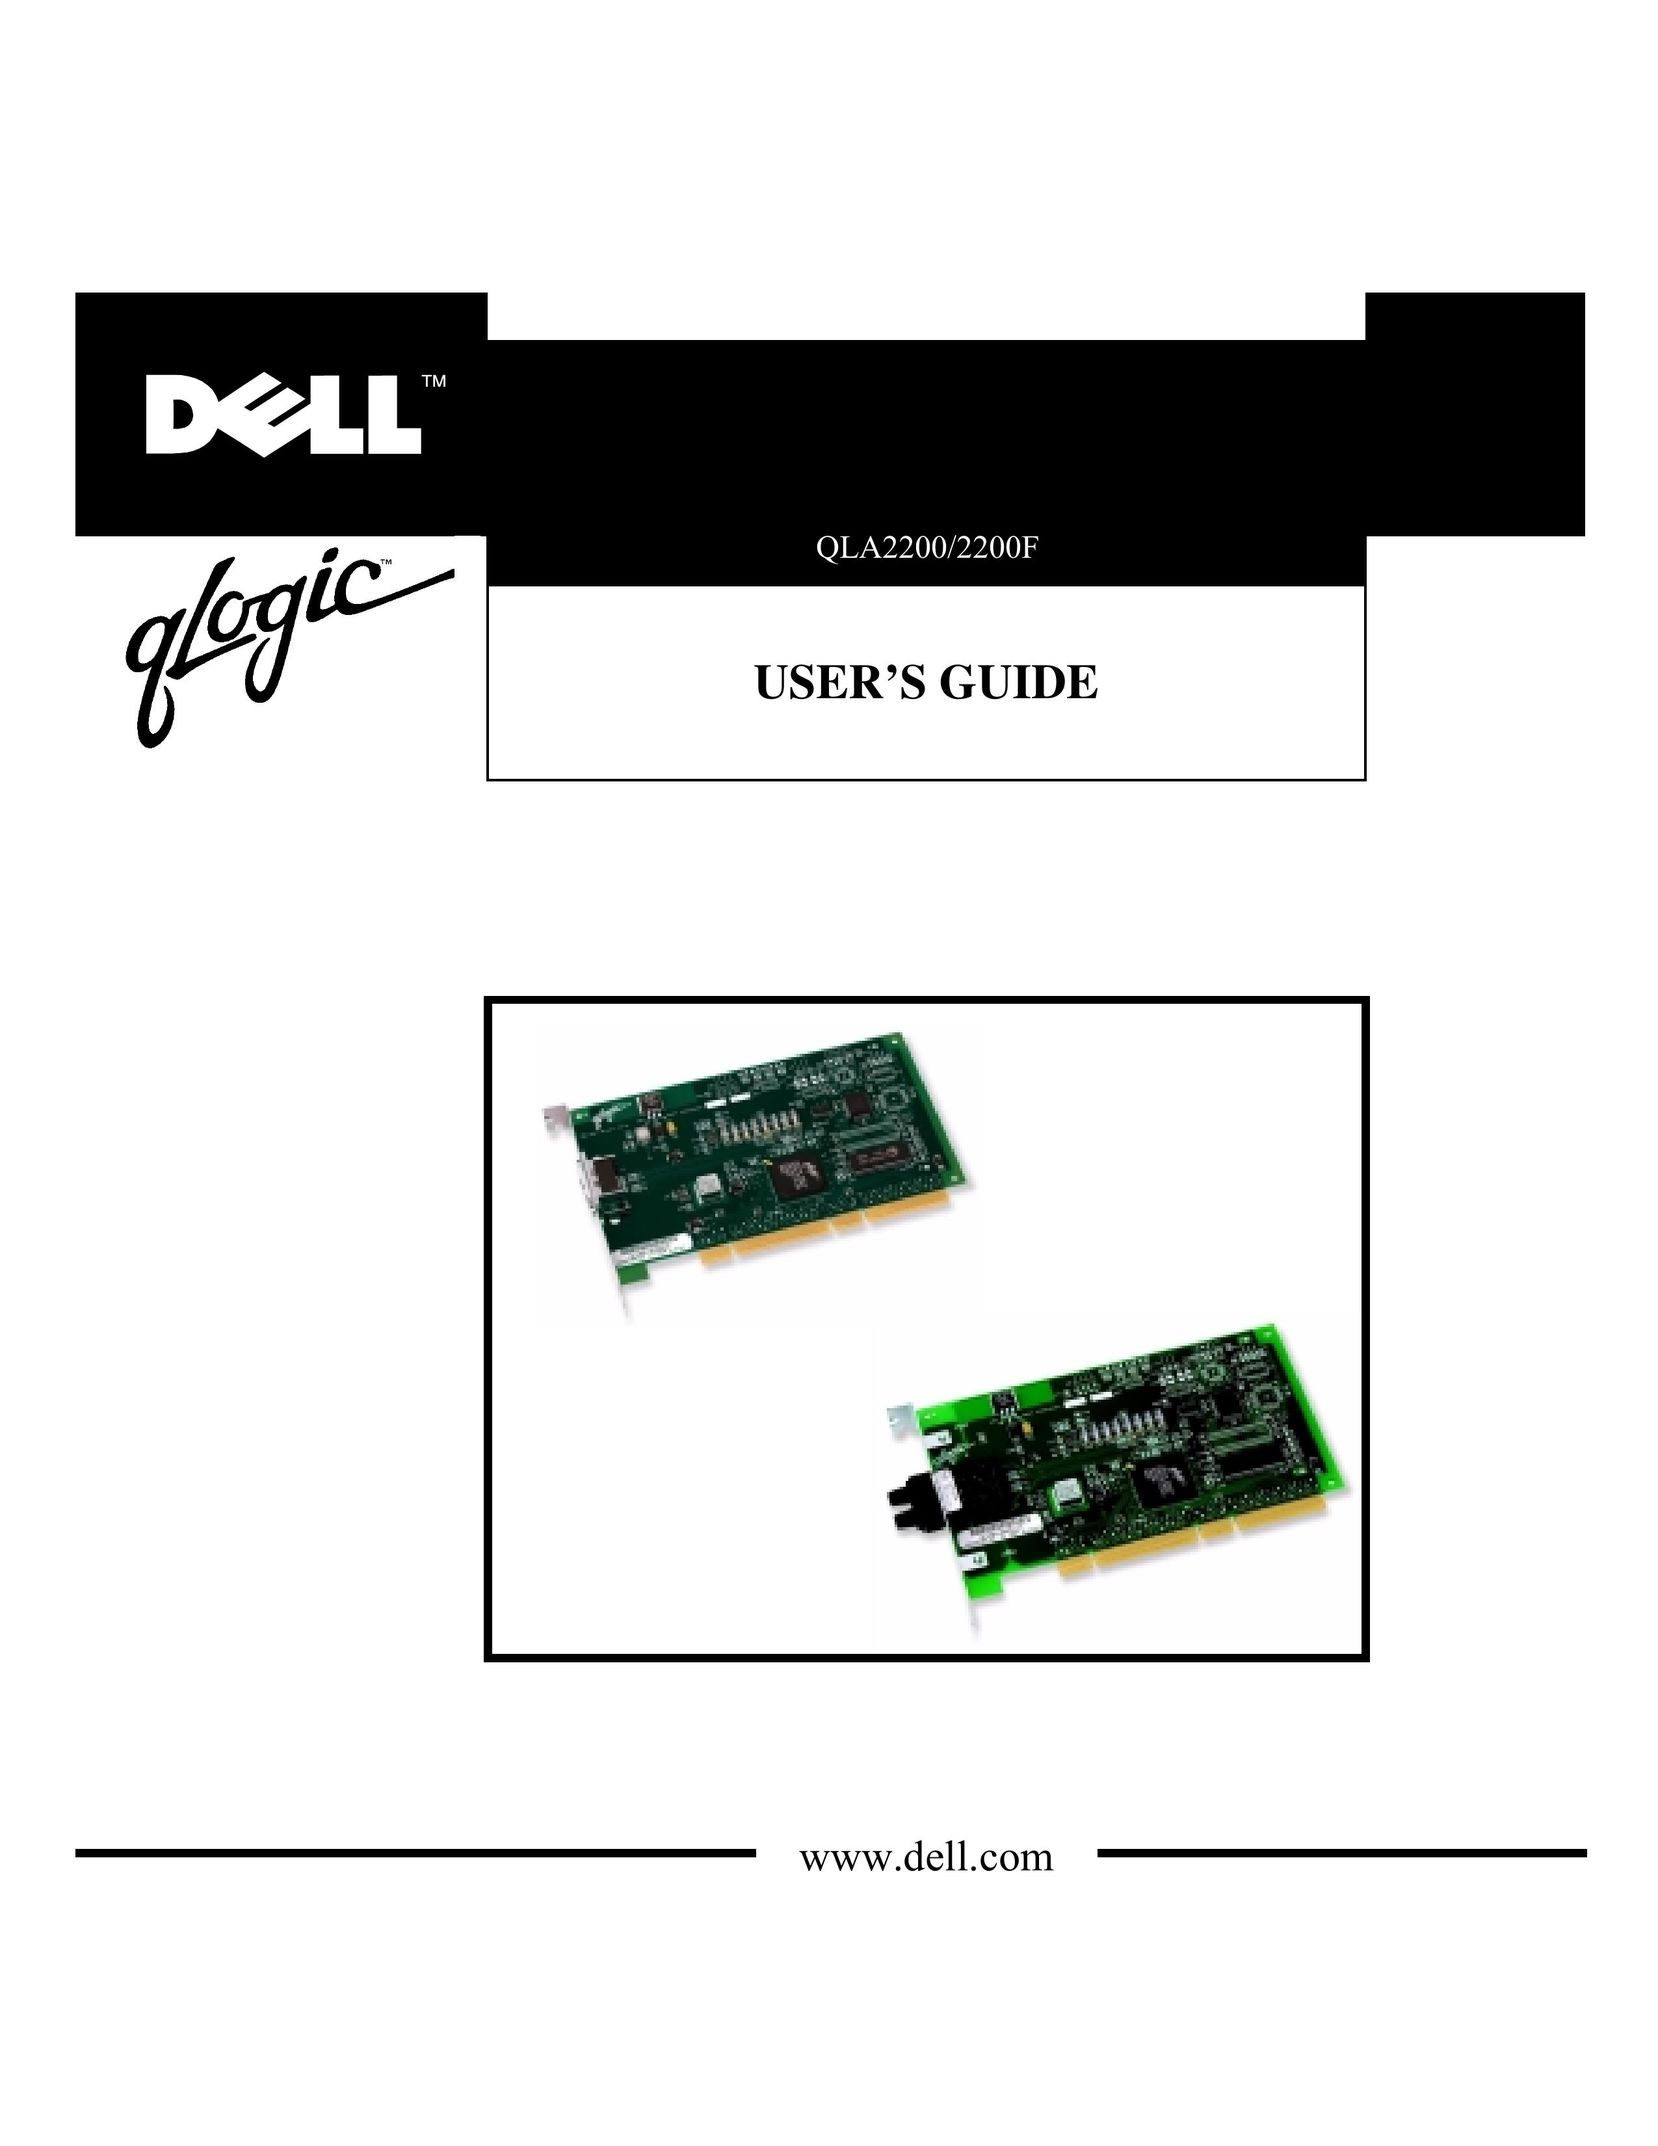 Dell 2200F Network Card User Manual